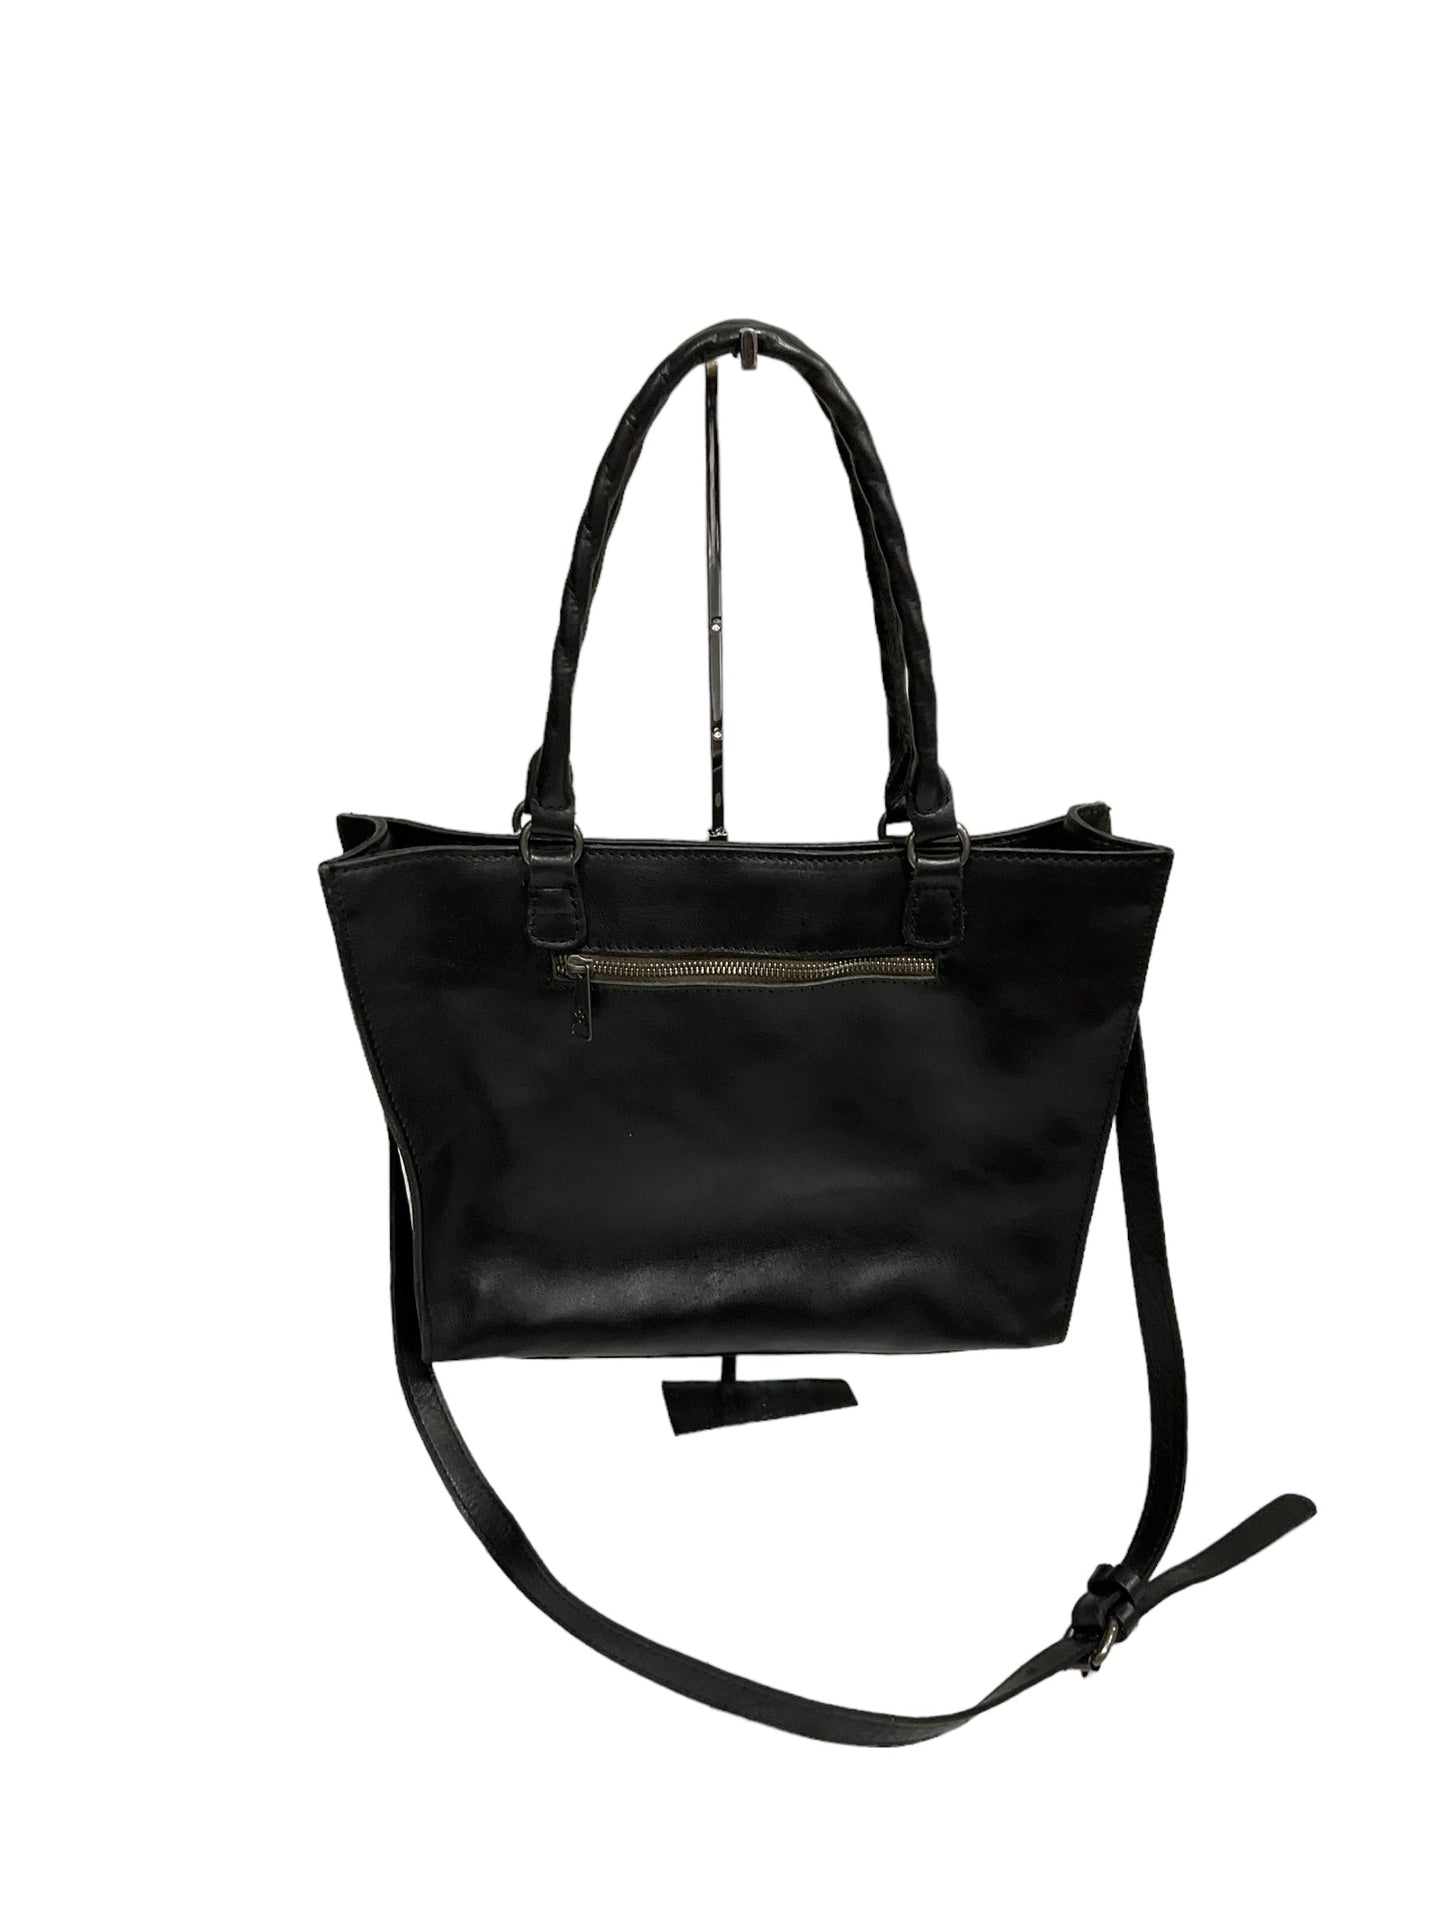 Handbag Leather Patricia Nash, Size Medium